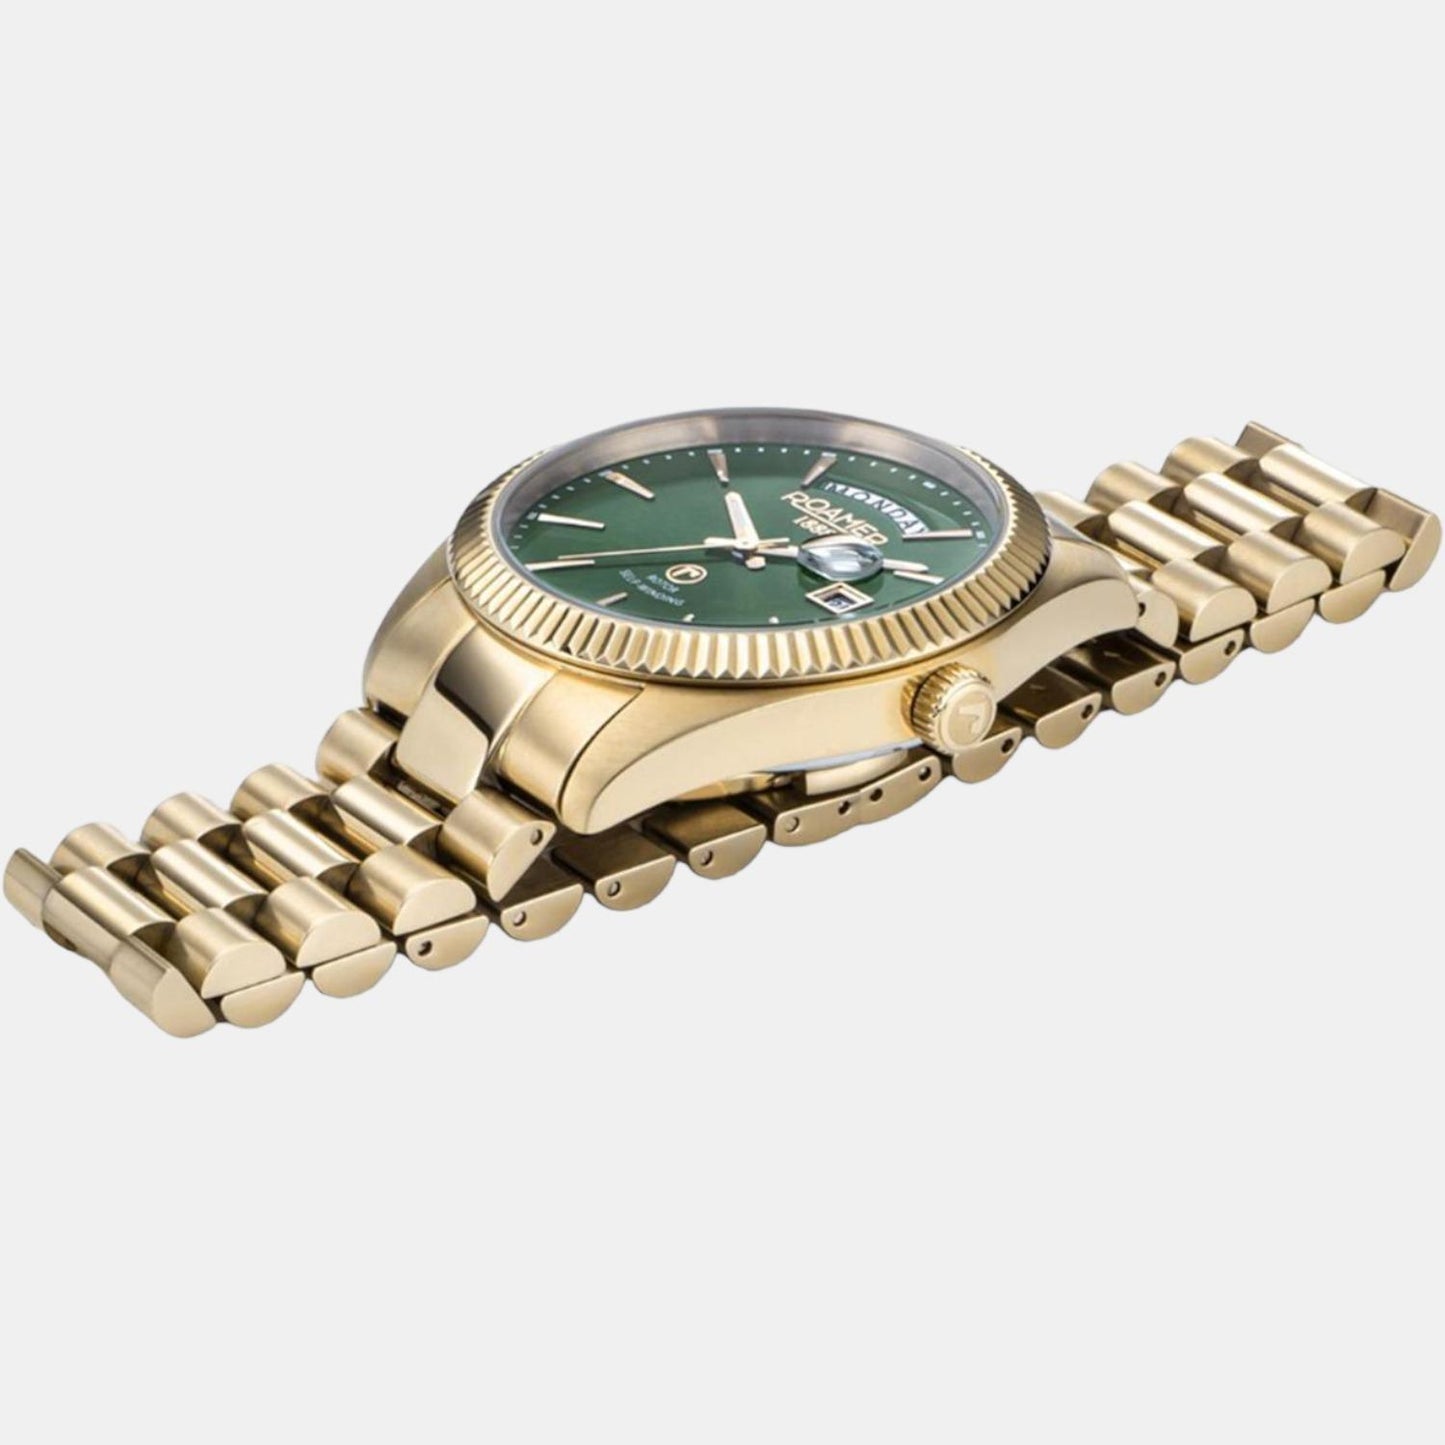 roamer-stainless-steel-green-analog-male-watch-981662-58-75-90